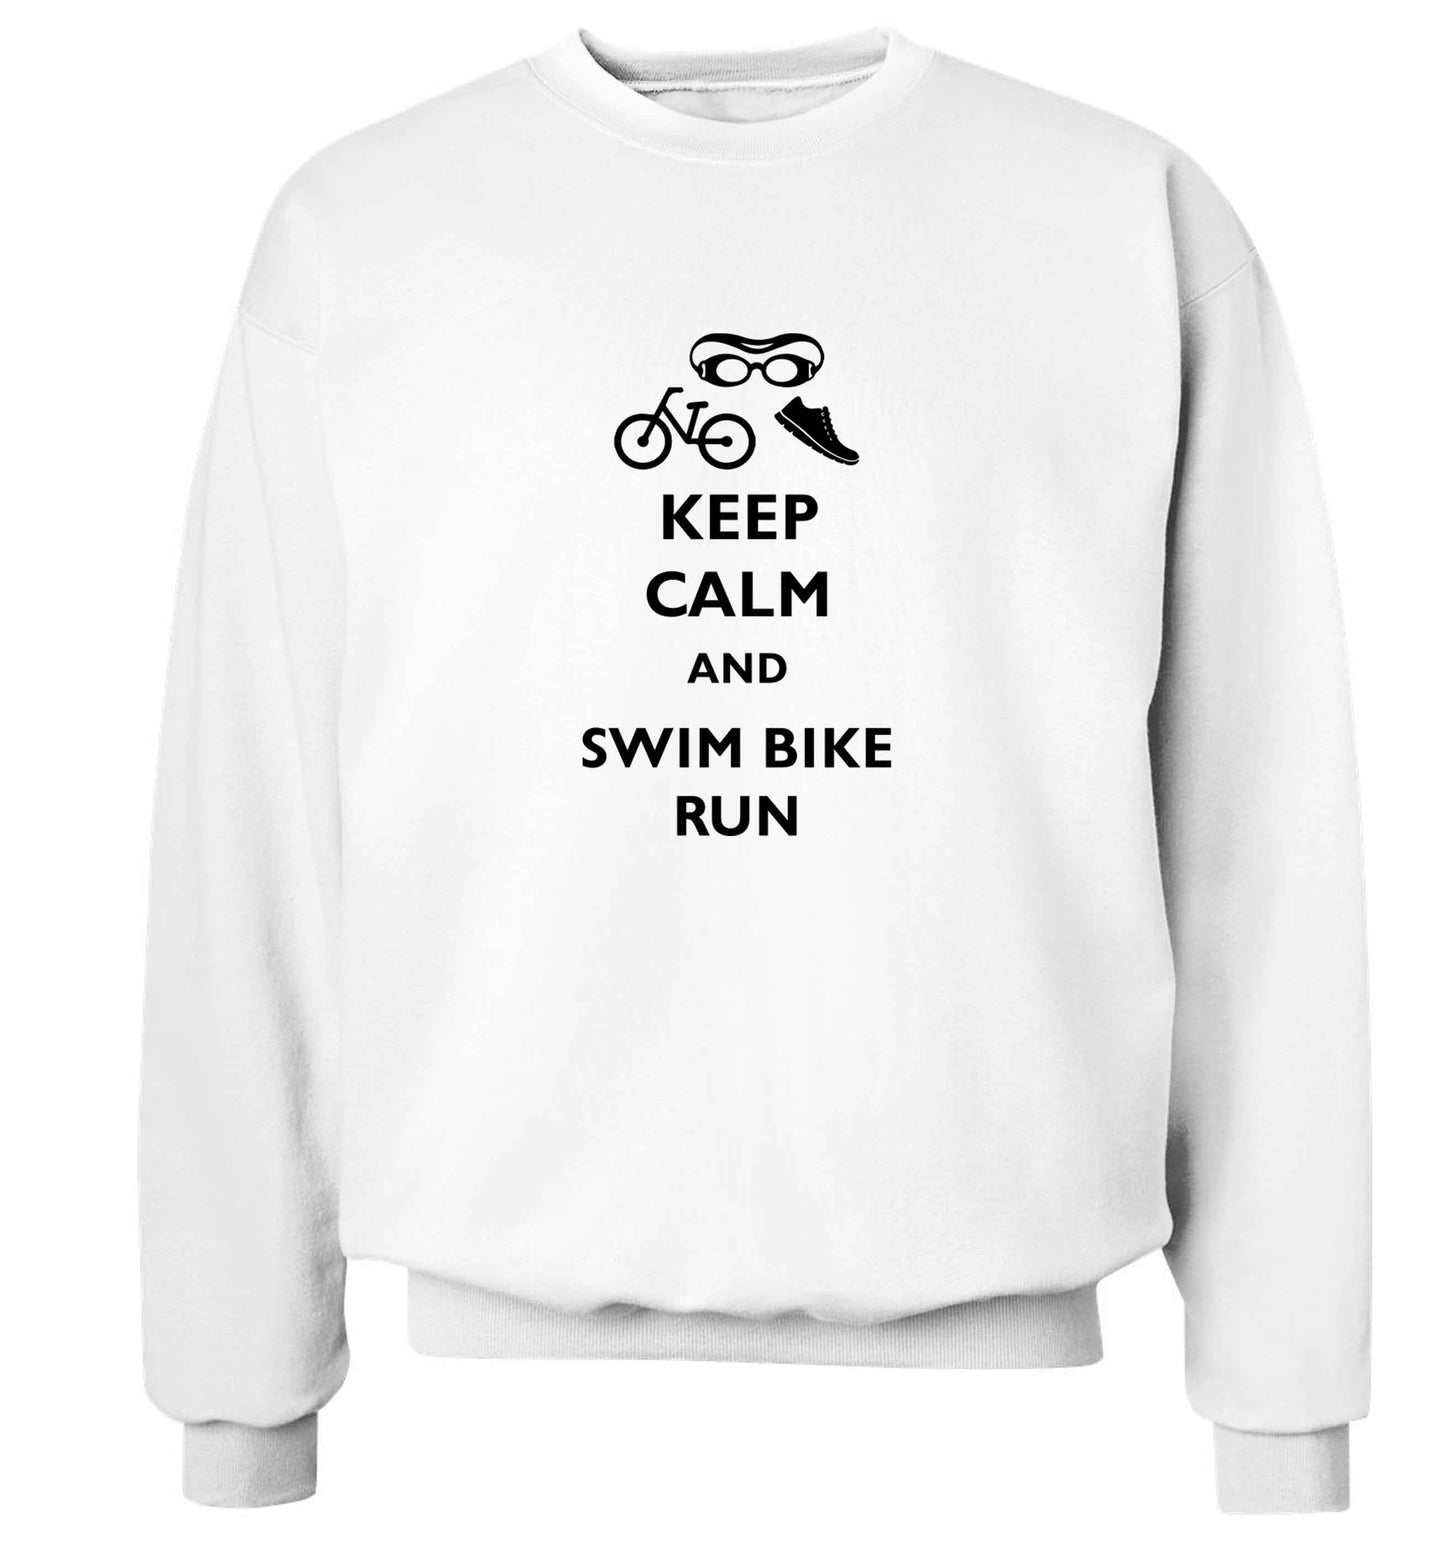 Keep calm and swim bike run adult's unisex white sweater 2XL